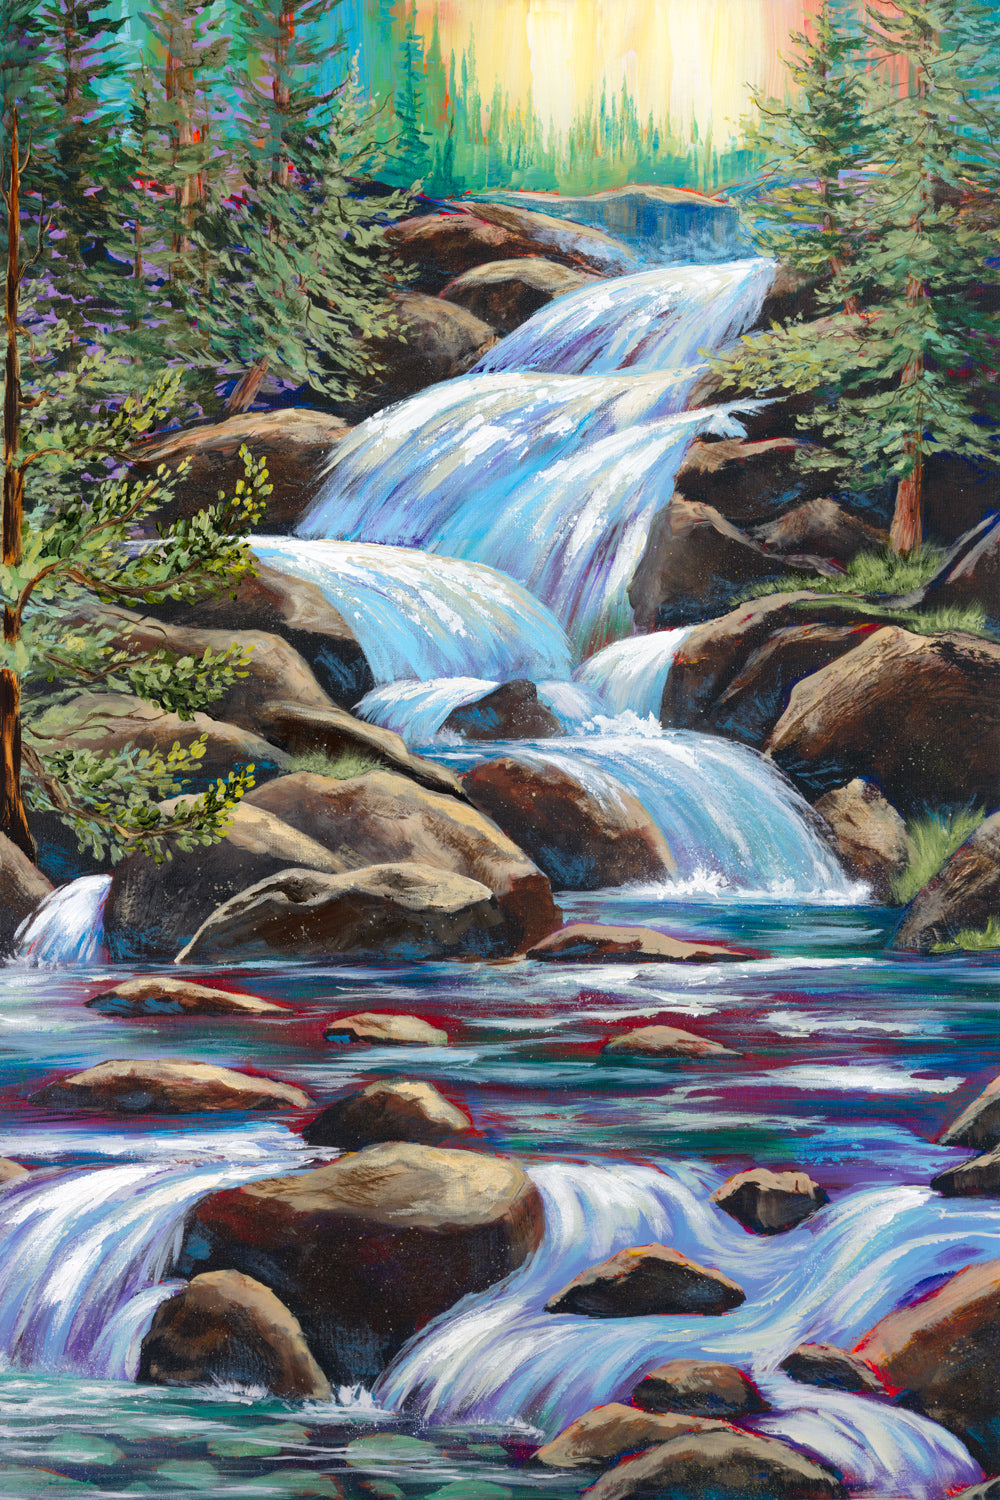 Free Fall 2 Waterfall - Original Acrylic on Canvas - Mixed Media